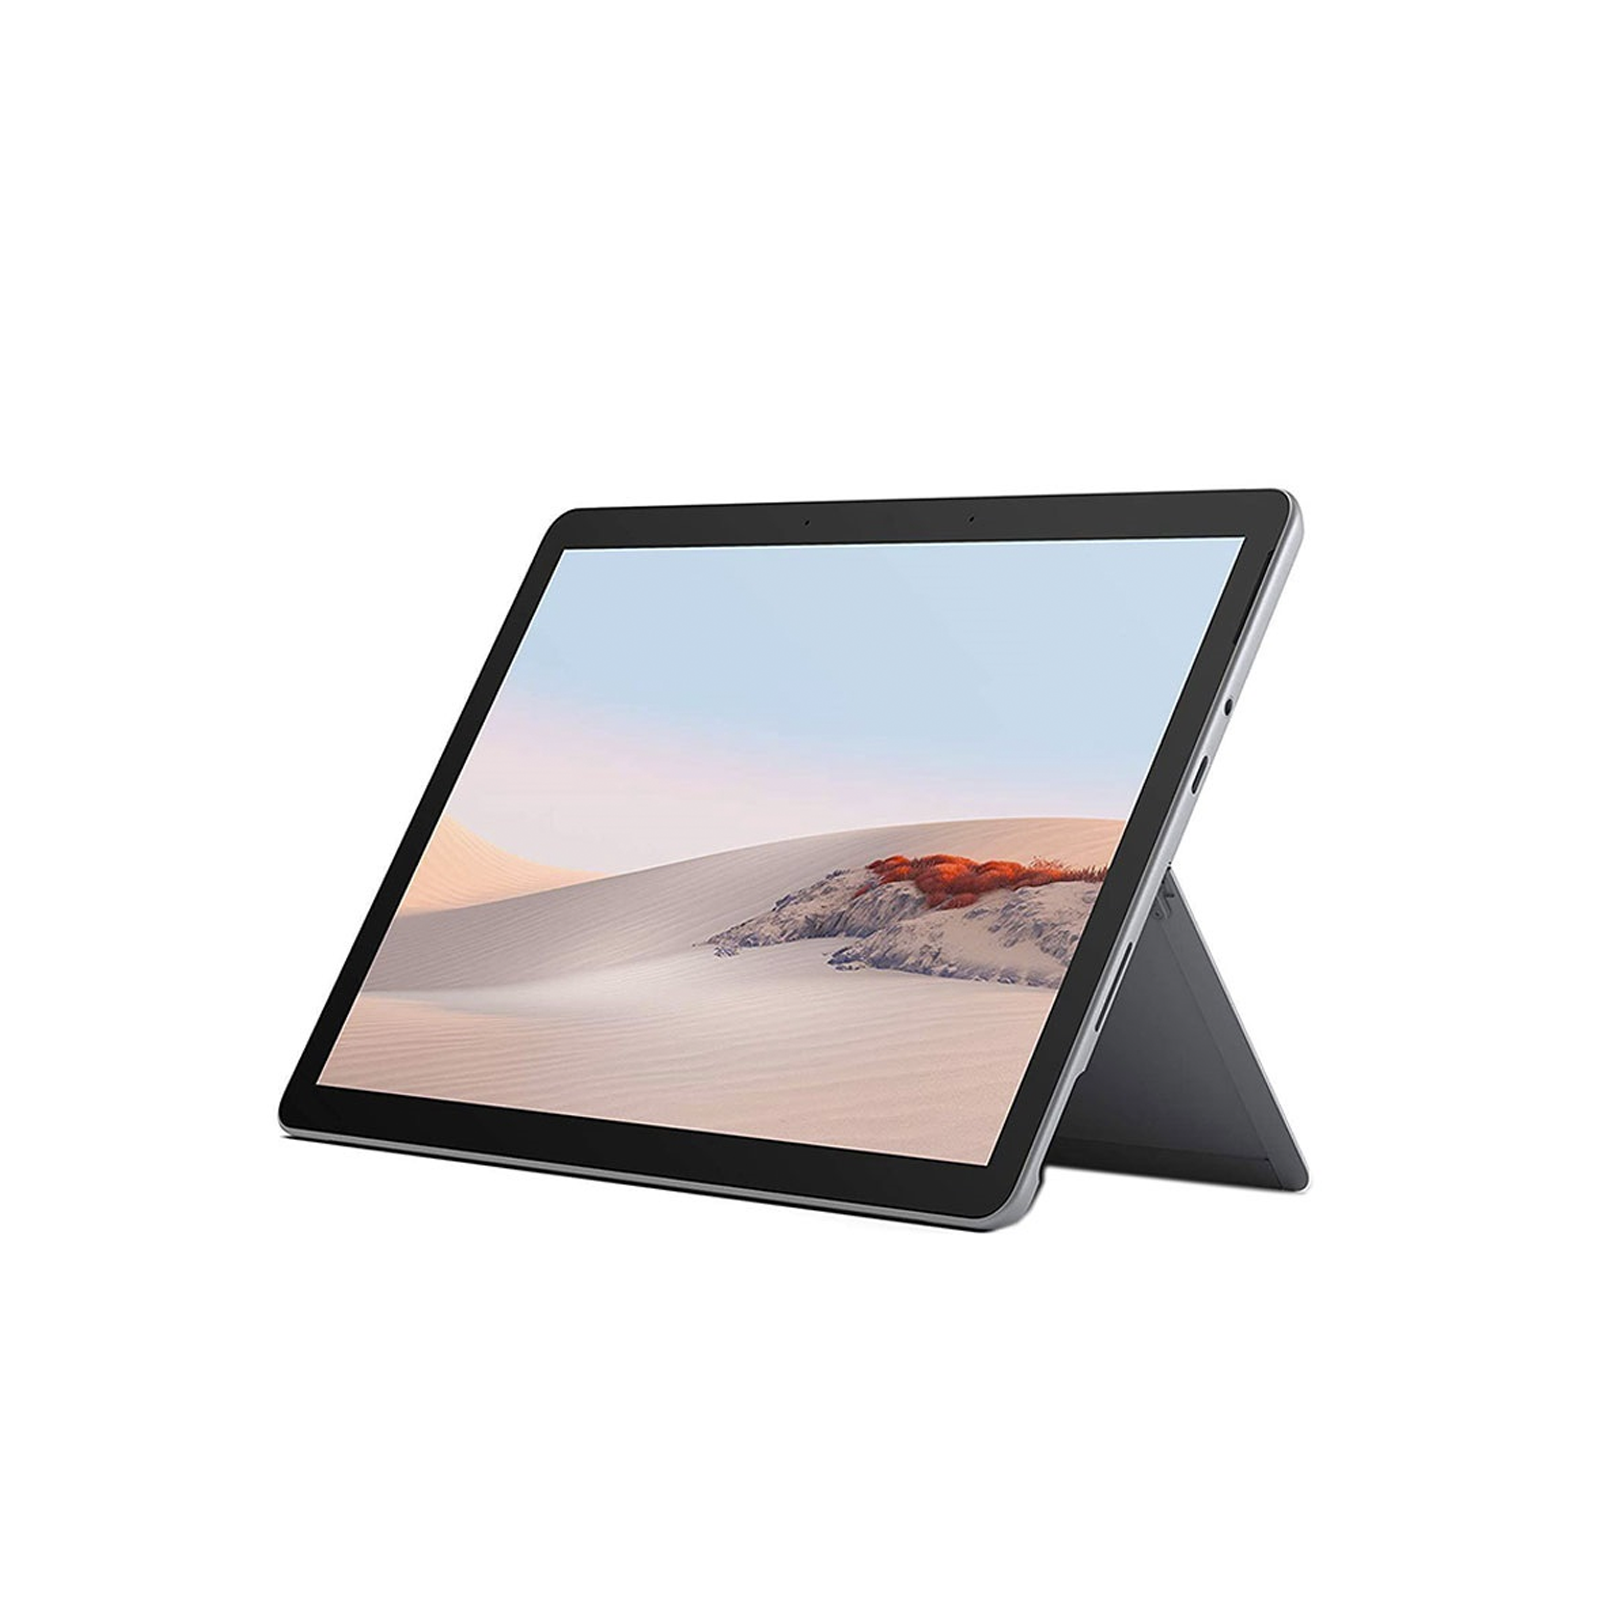 Microsoft Surface Go 256GB Silver Brand New